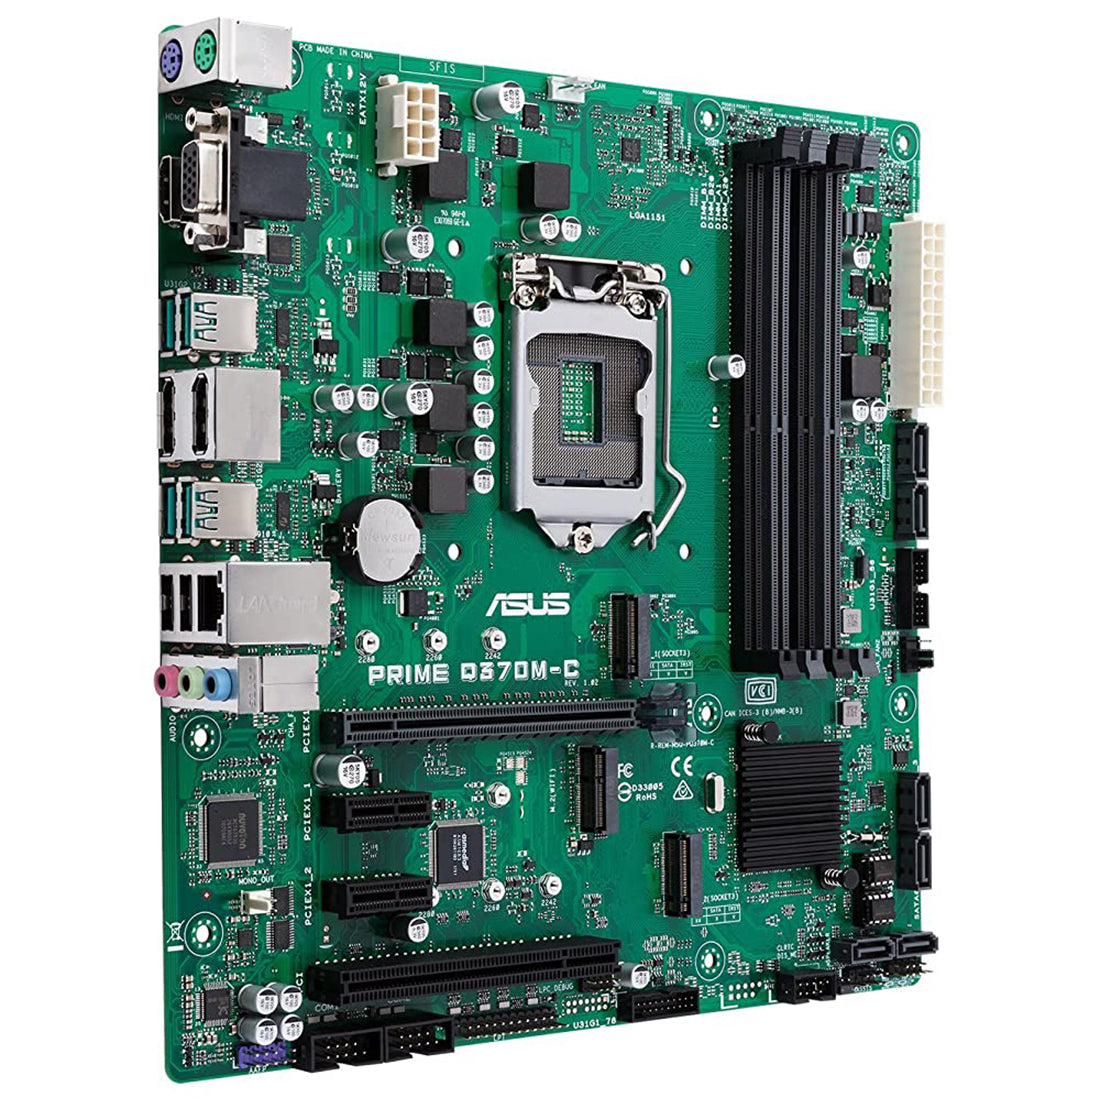 Asus Prime Q370M-C/CSM LGA 1151 u-ATX मदरबोर्ड